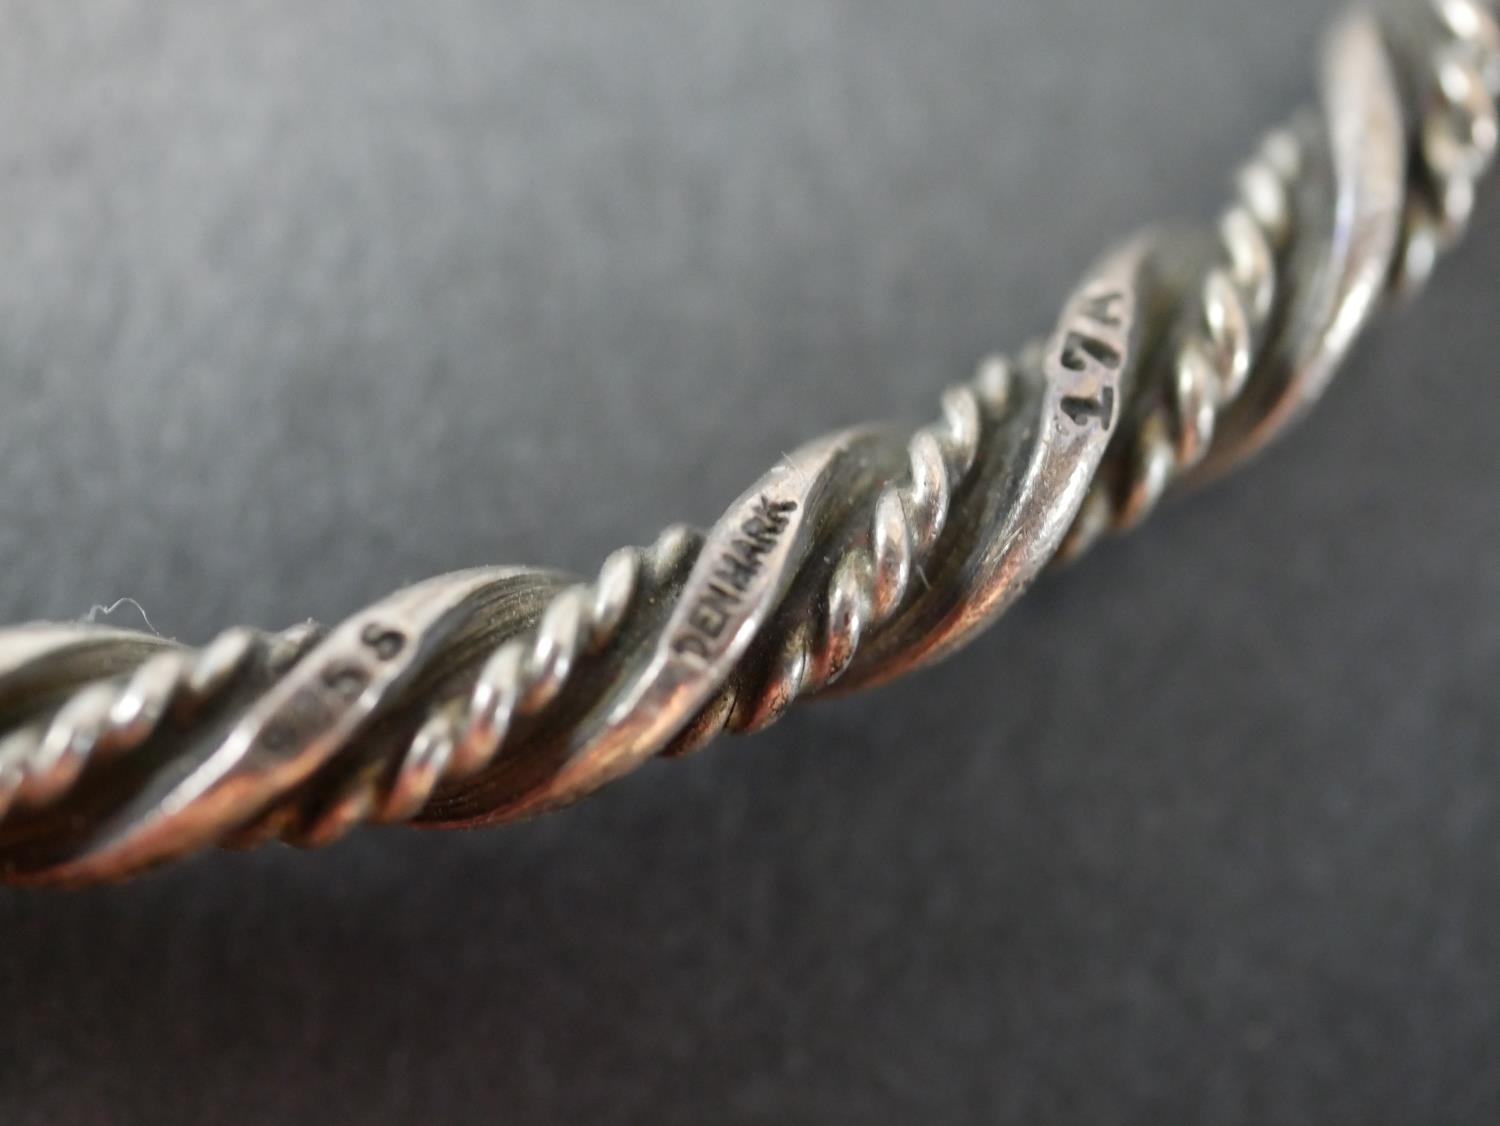 A Georg Jensen silver rope twist bangle, design no. 17B, George Jensen oval mark. - Image 4 of 7